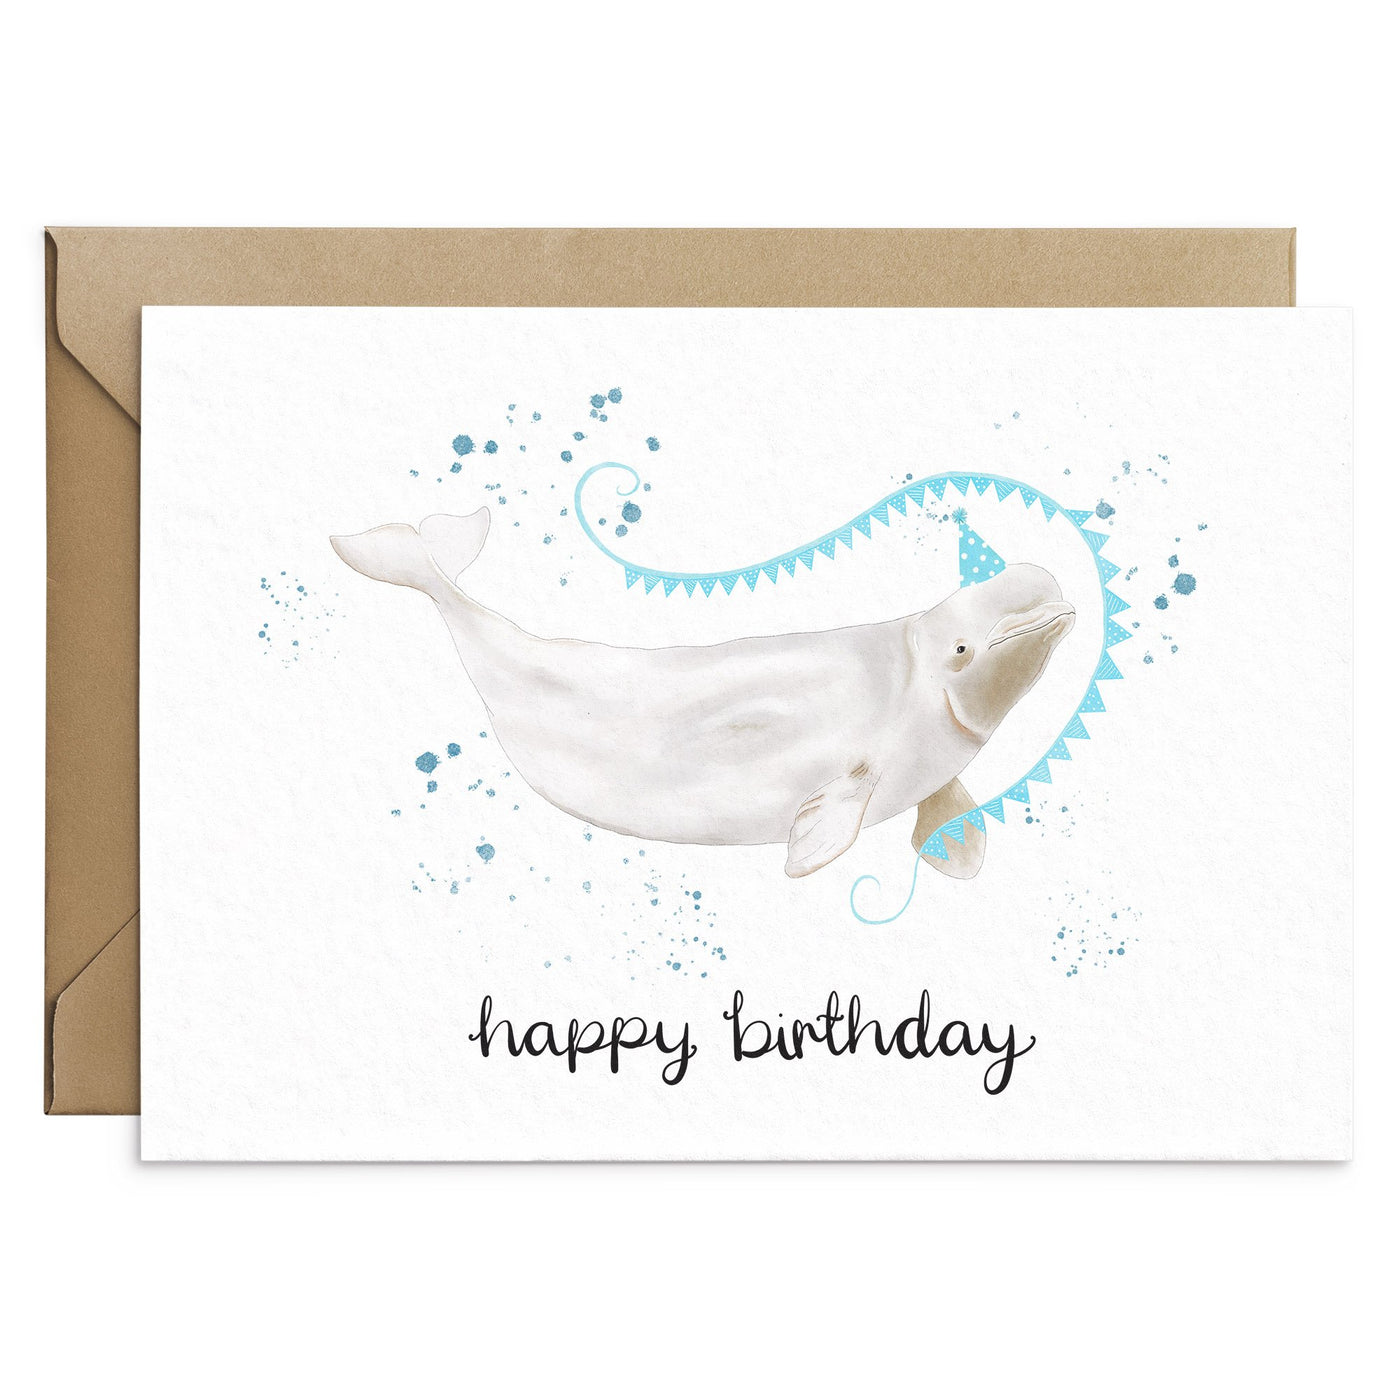 Beluga Whale Birthday Card - Poppins & Co.